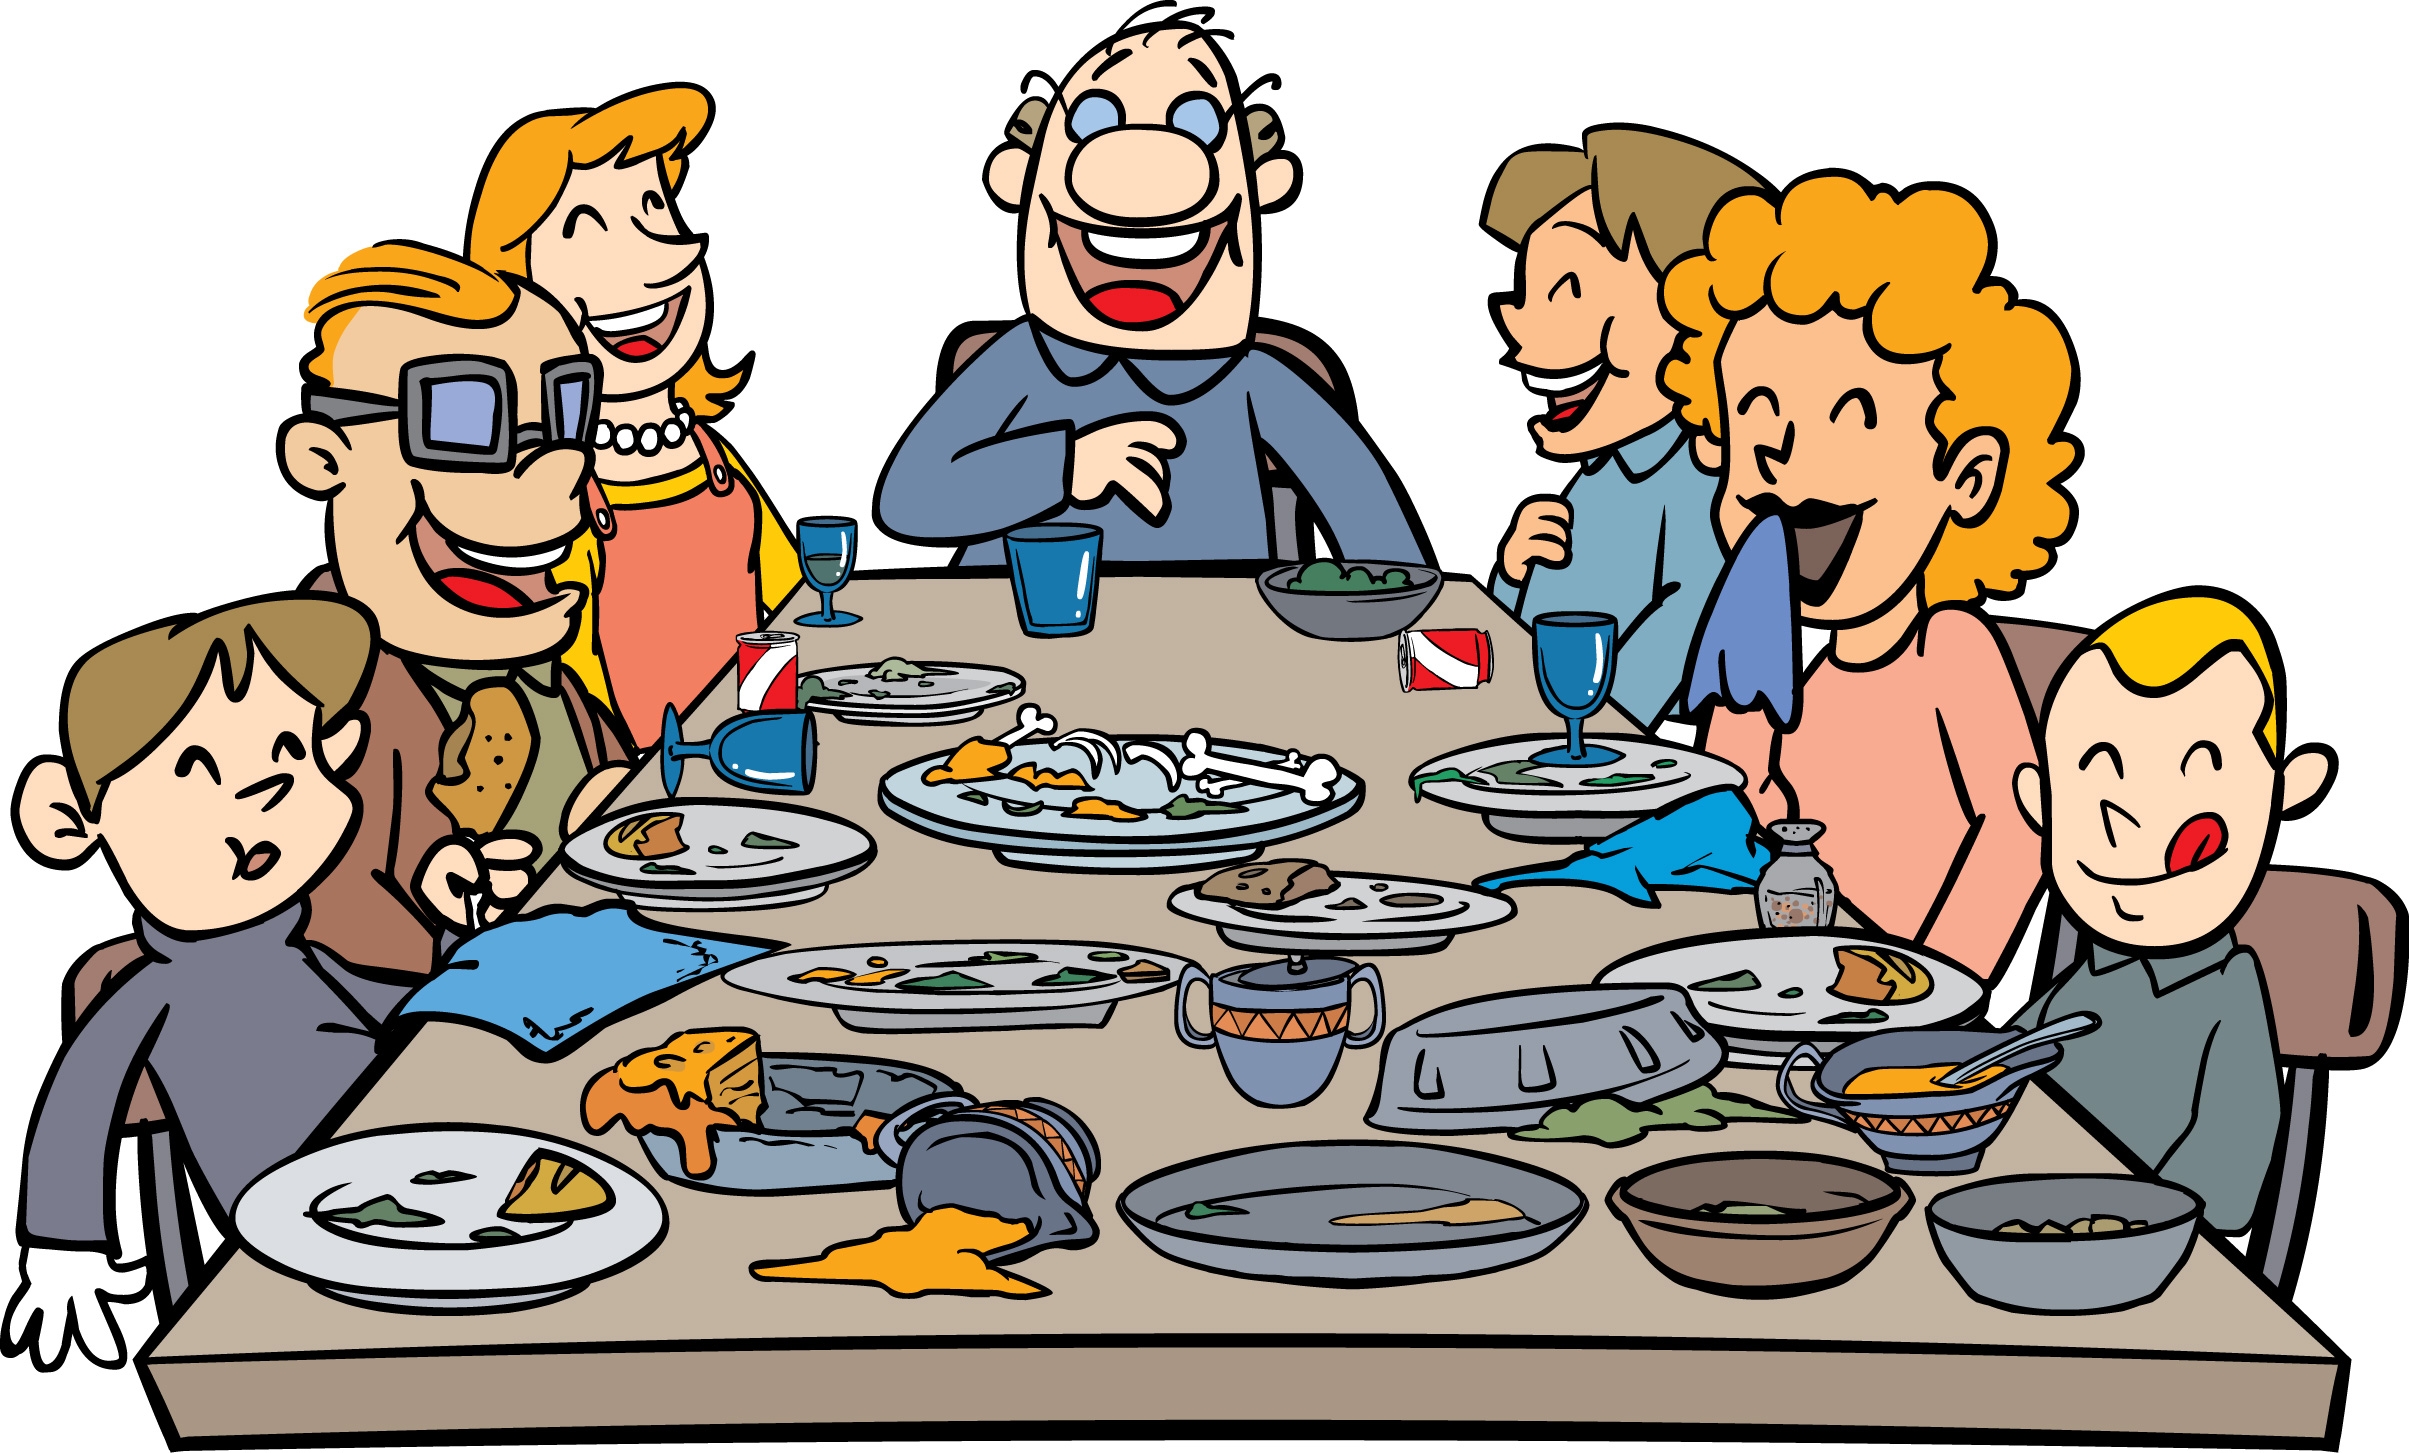 Thanksgiving family dinner clipart - ClipartFox